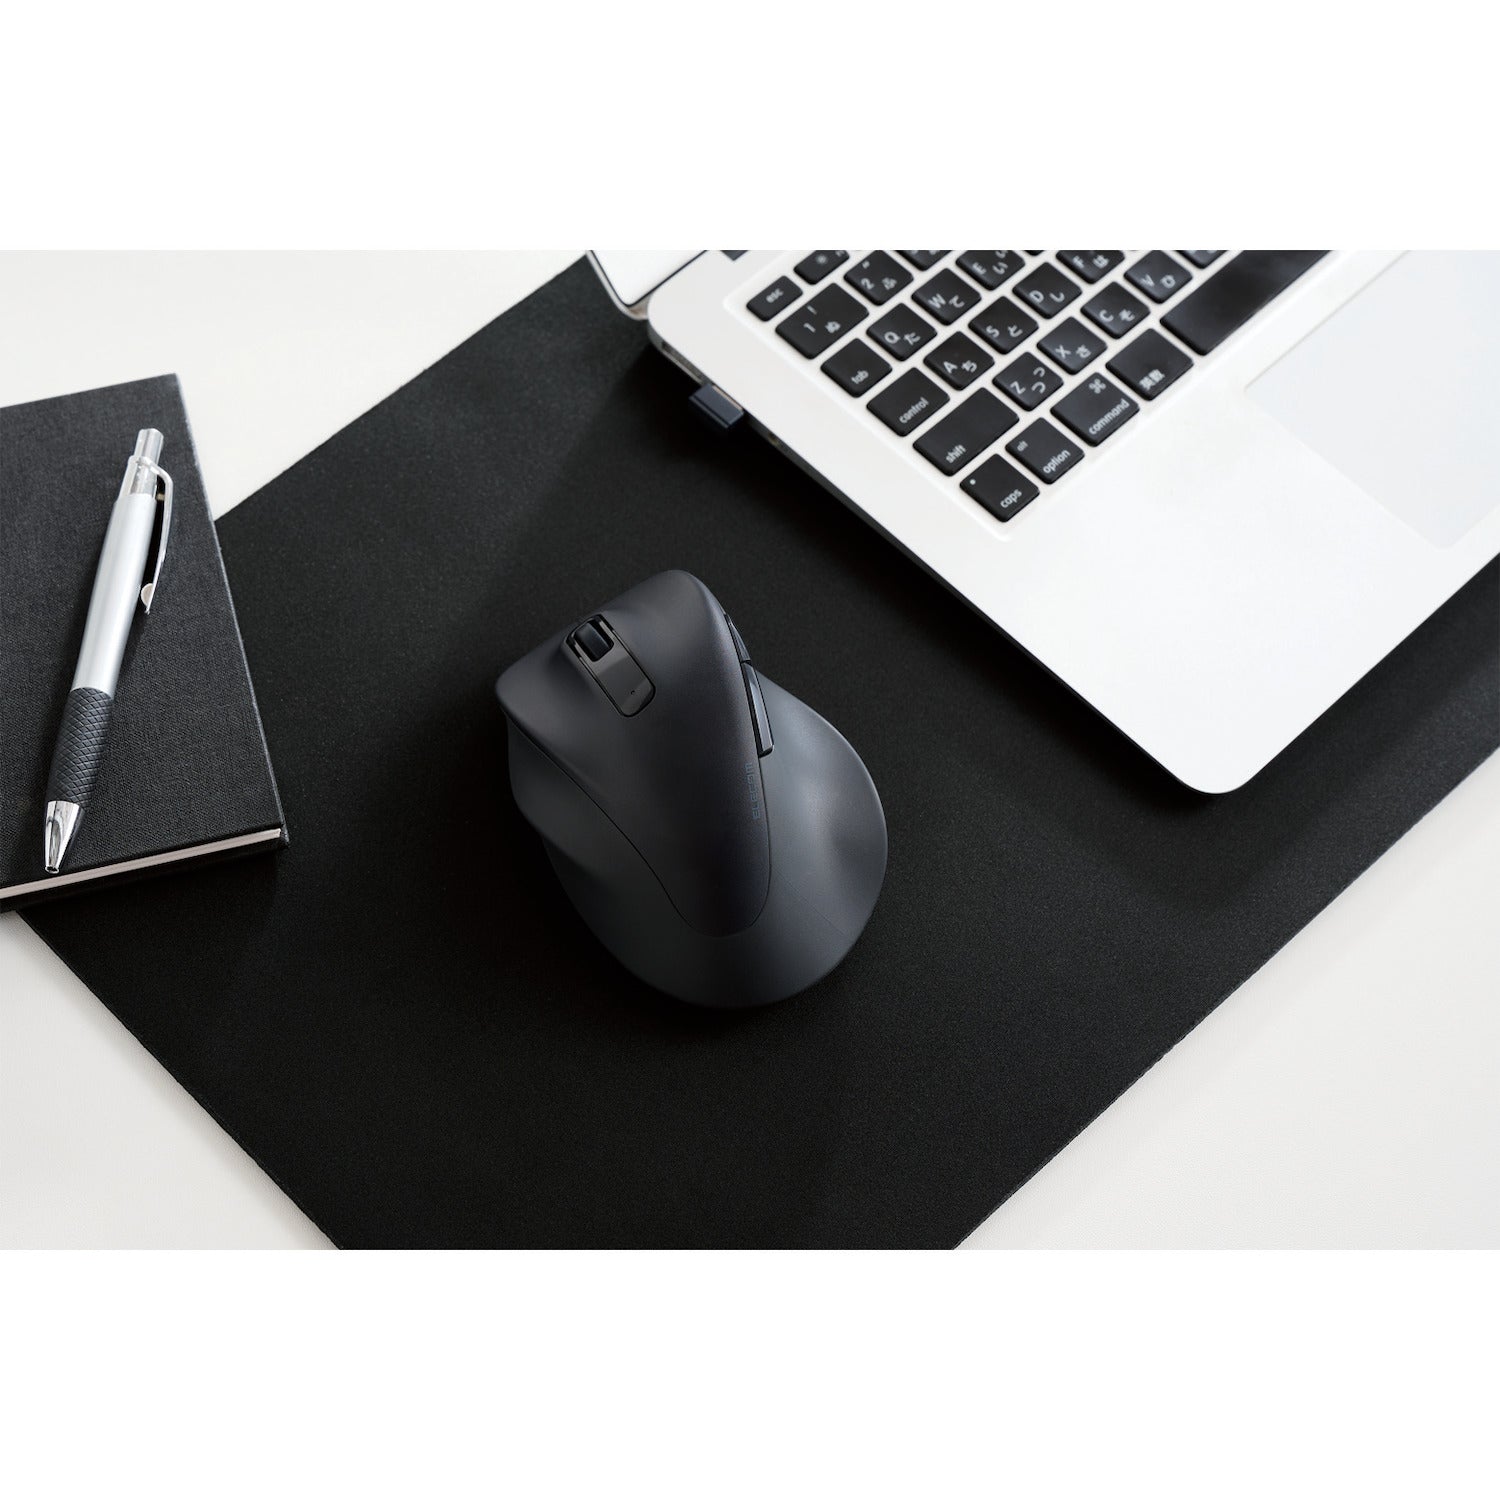 EX-G Wireless USB Ergonomic Left-handed Mouse